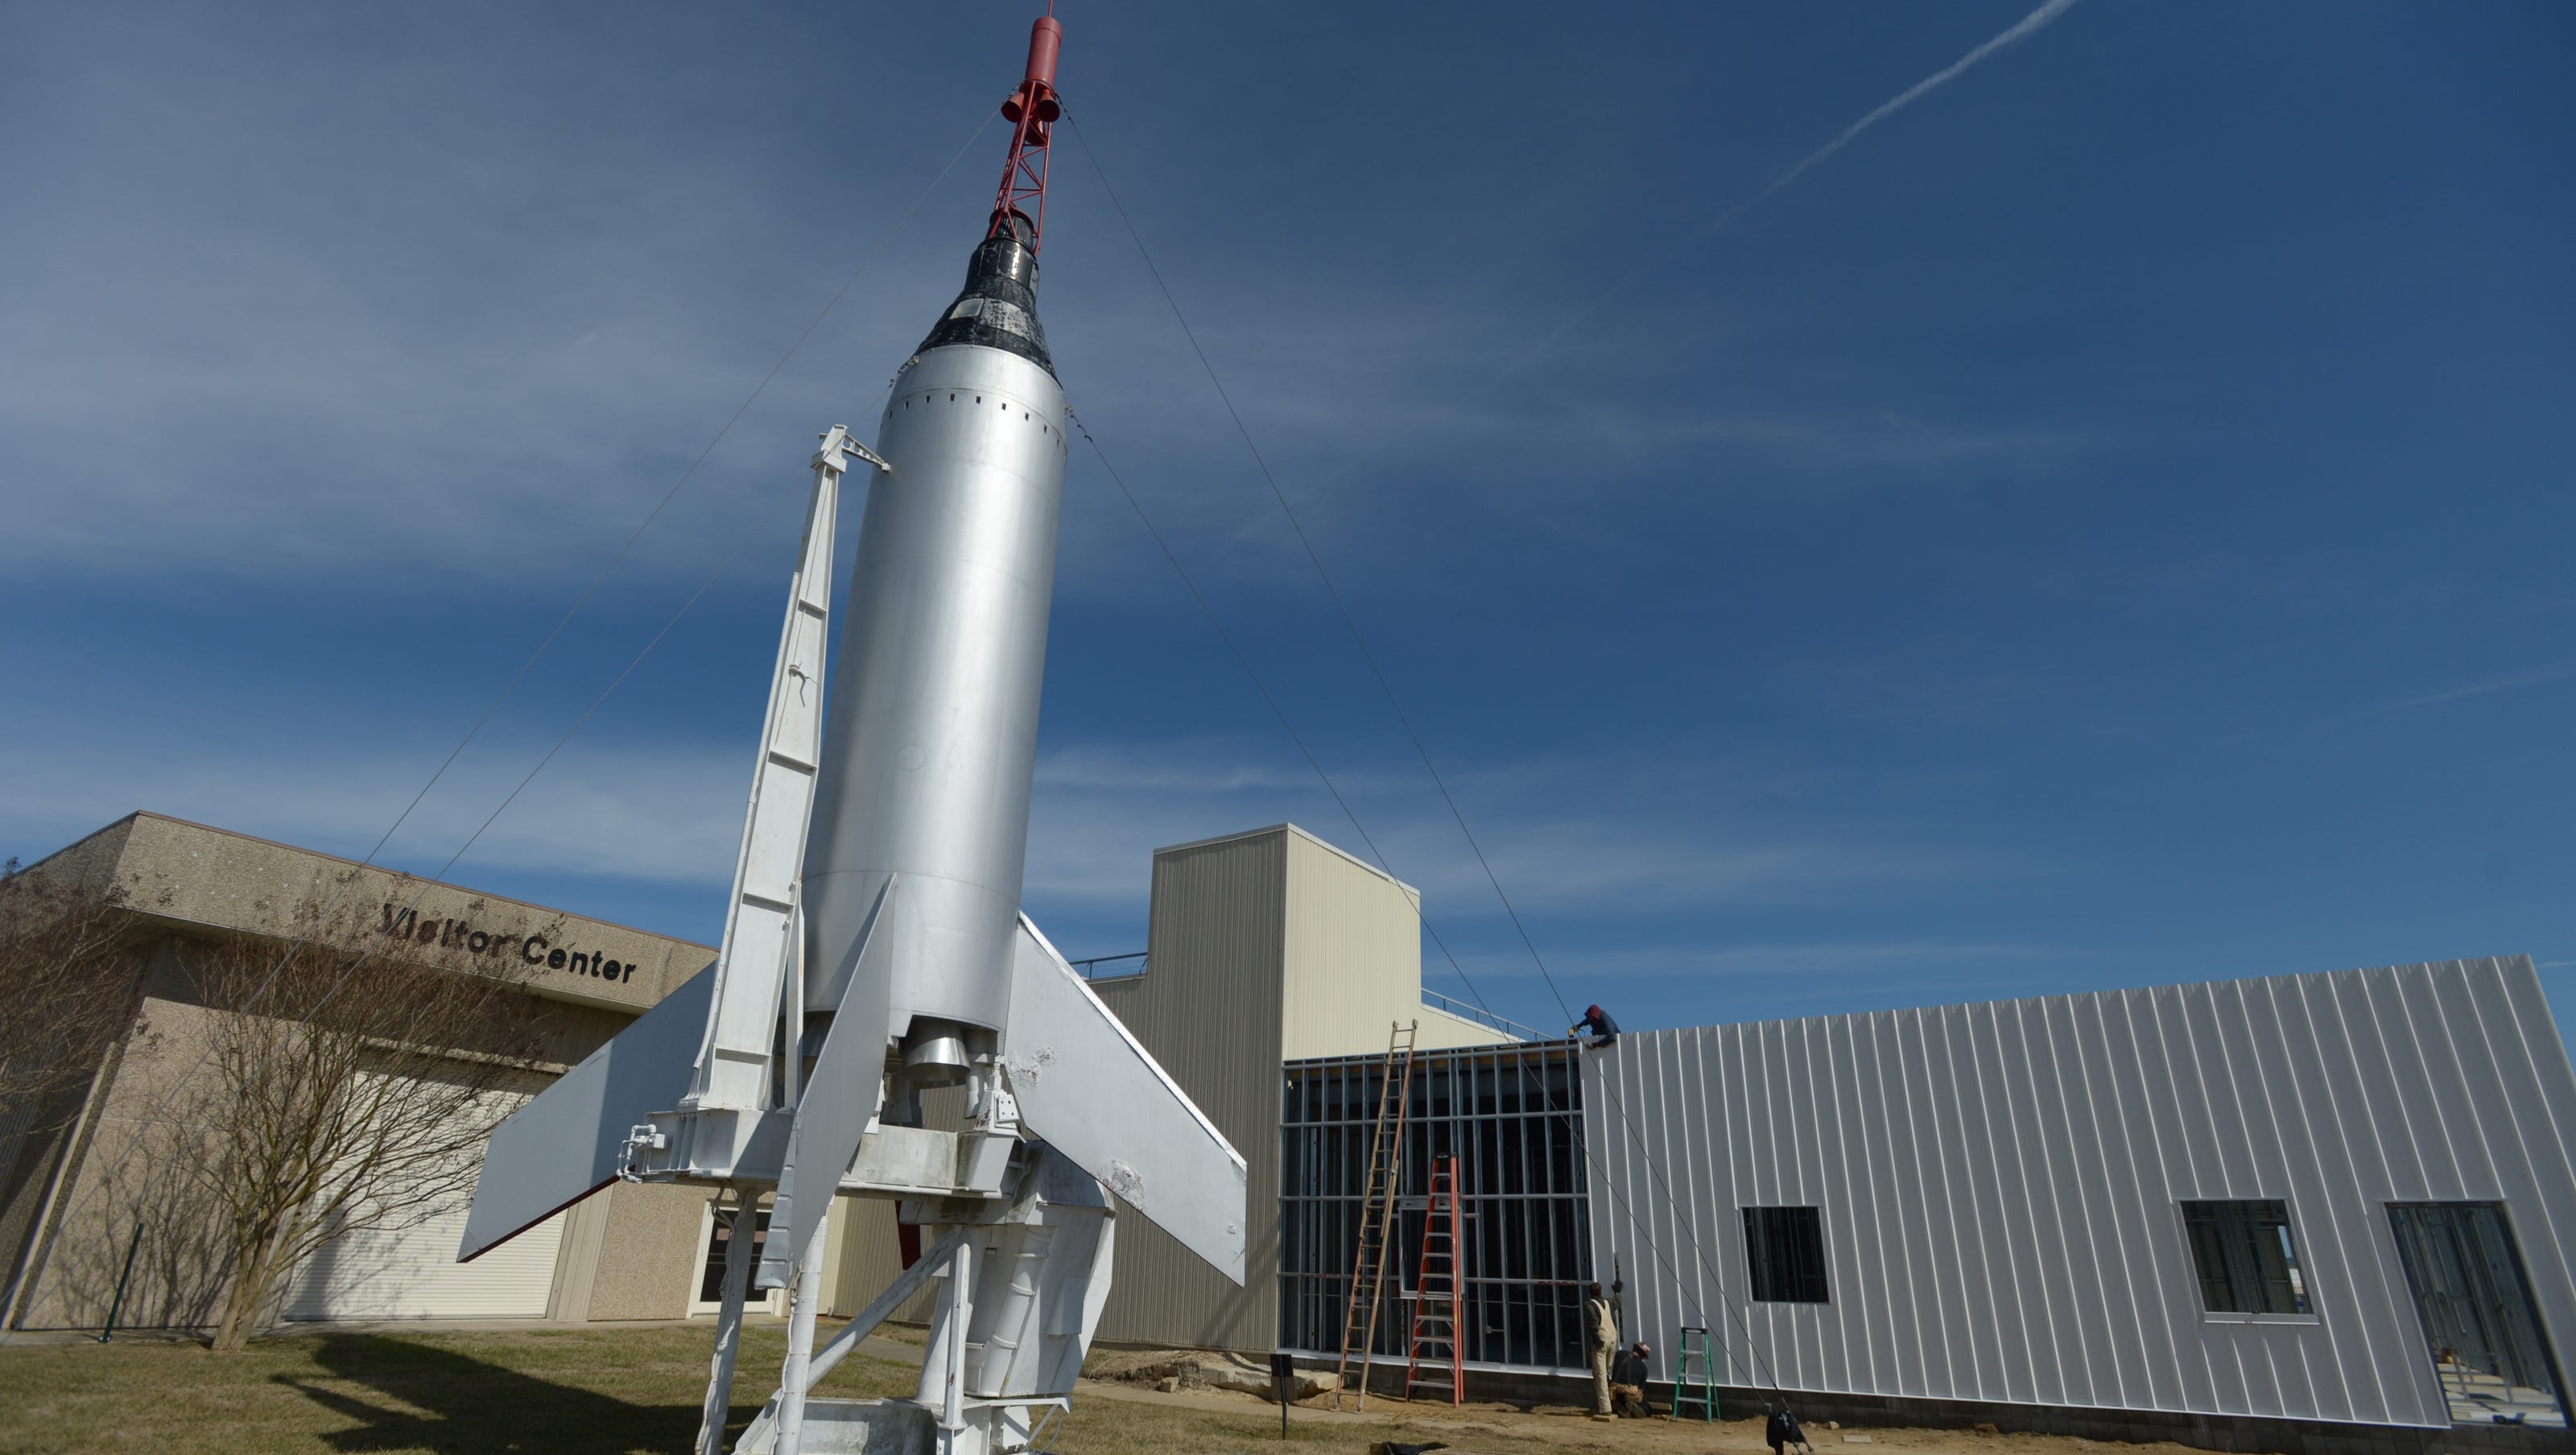 NASA Wallops rocket launch reset for Wednesday night.